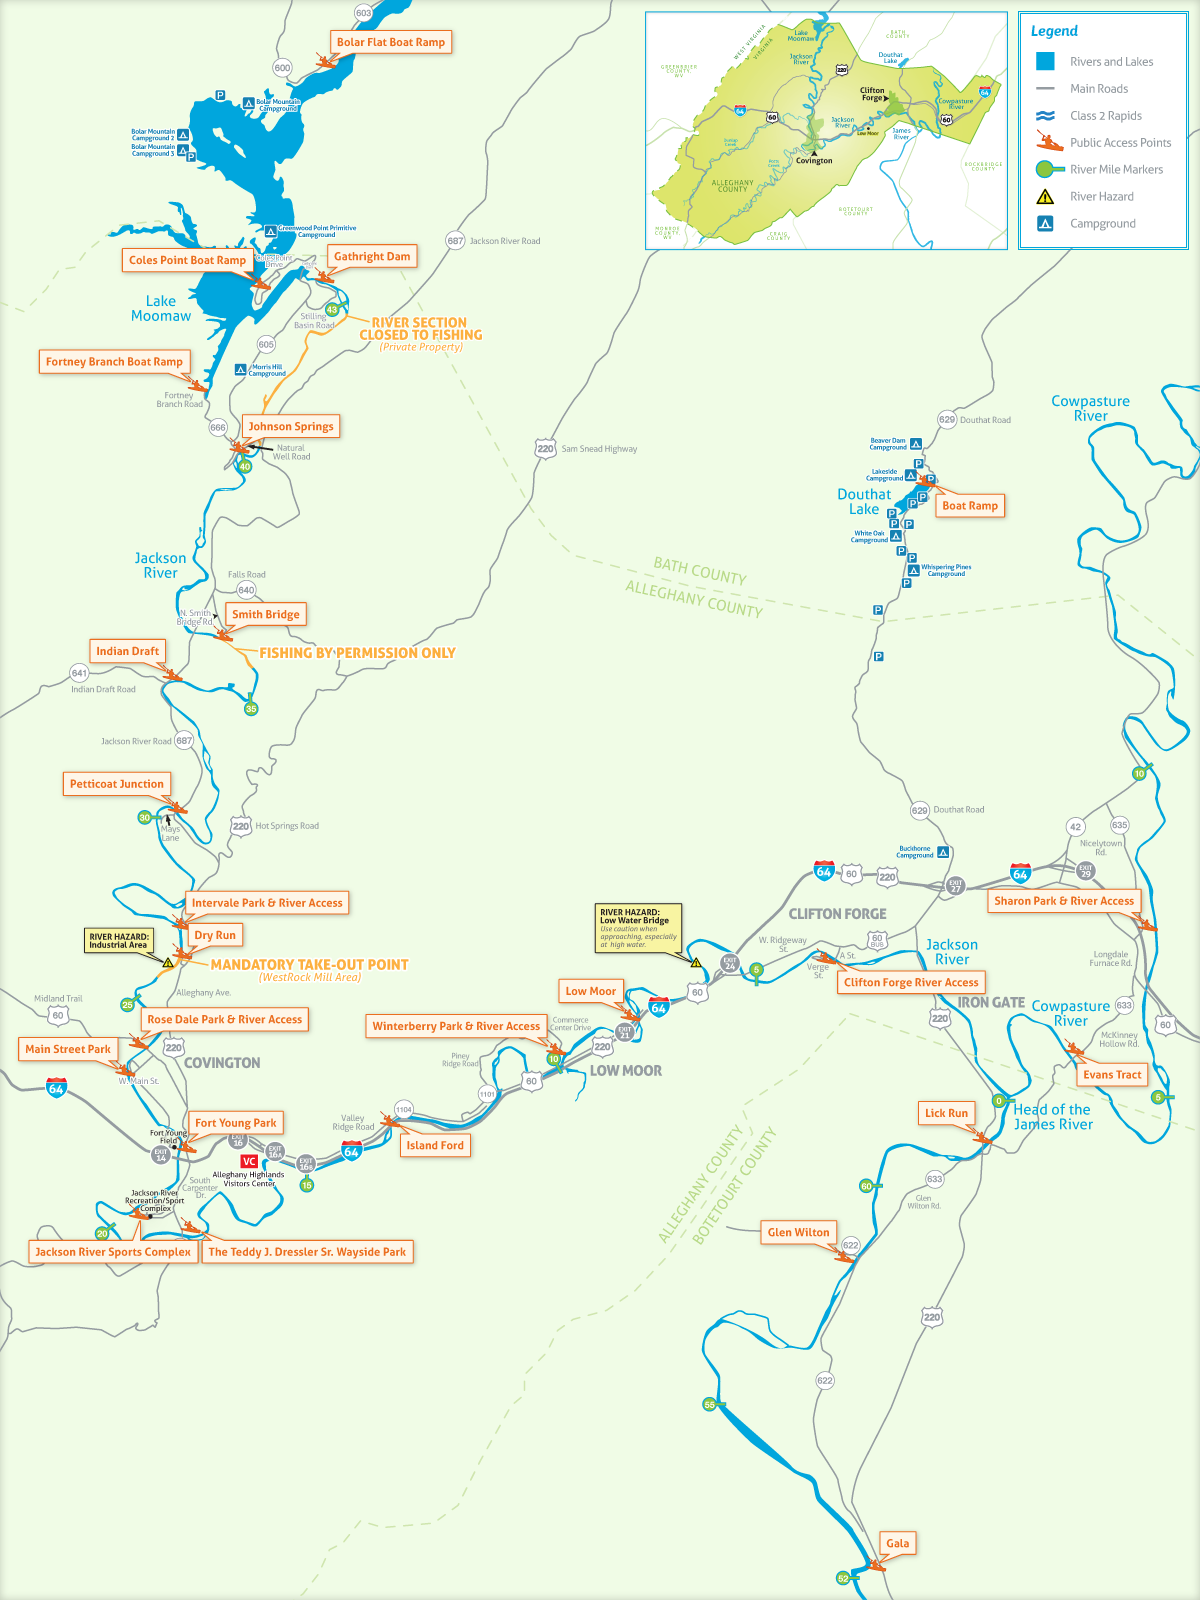 Alleghany Highlands Blueway map